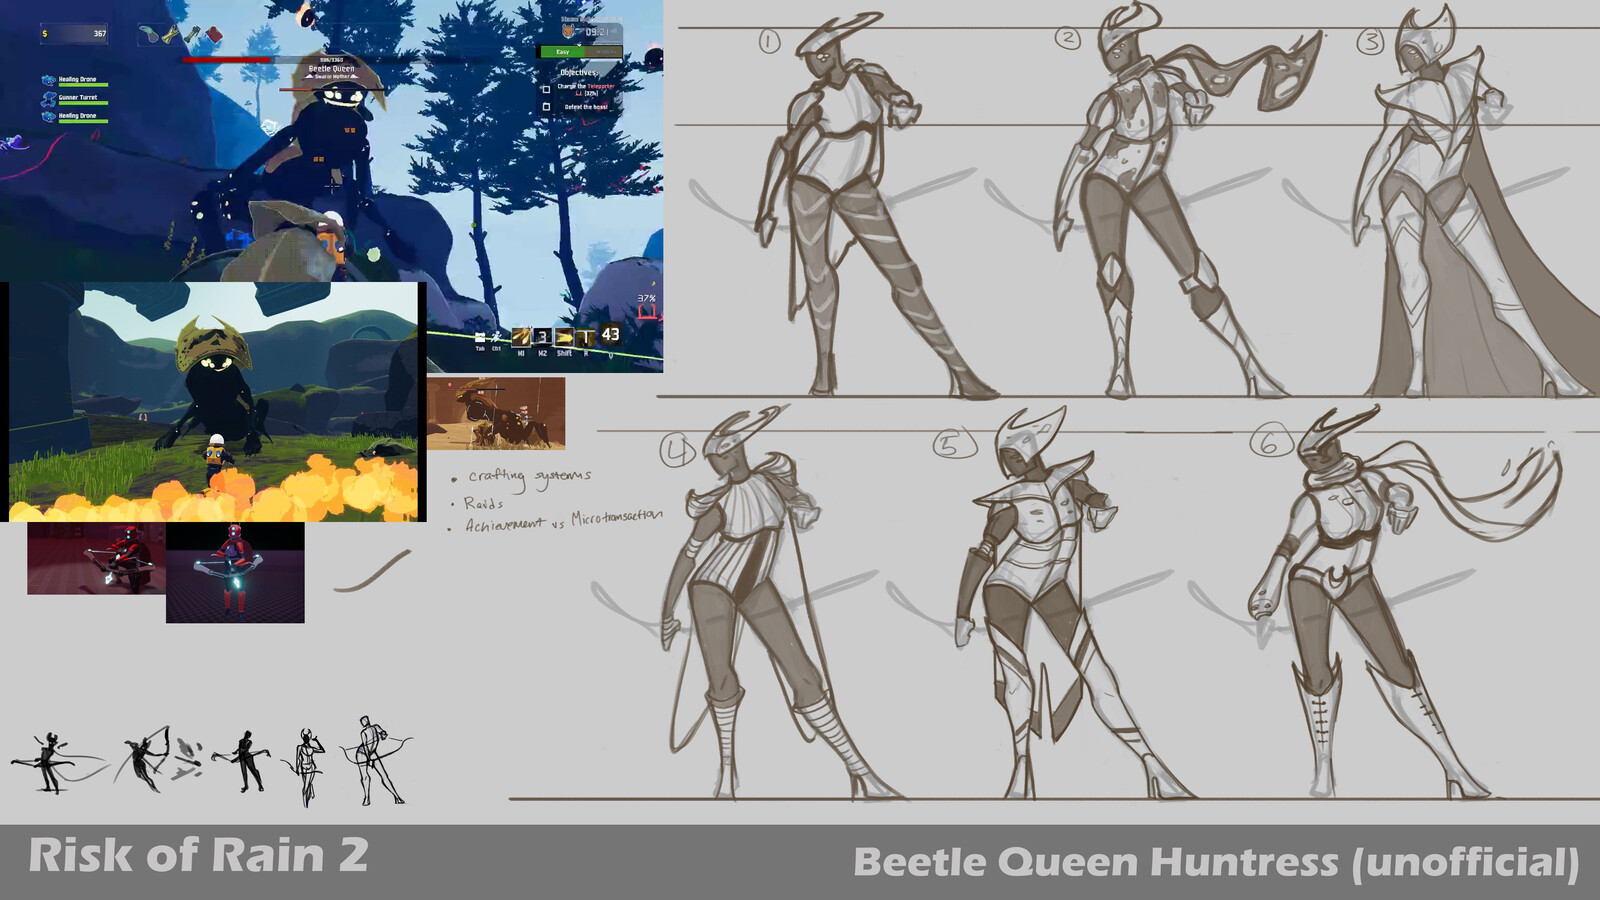 Risk of Rain 2 - Queen Beetle Huntress Concept.